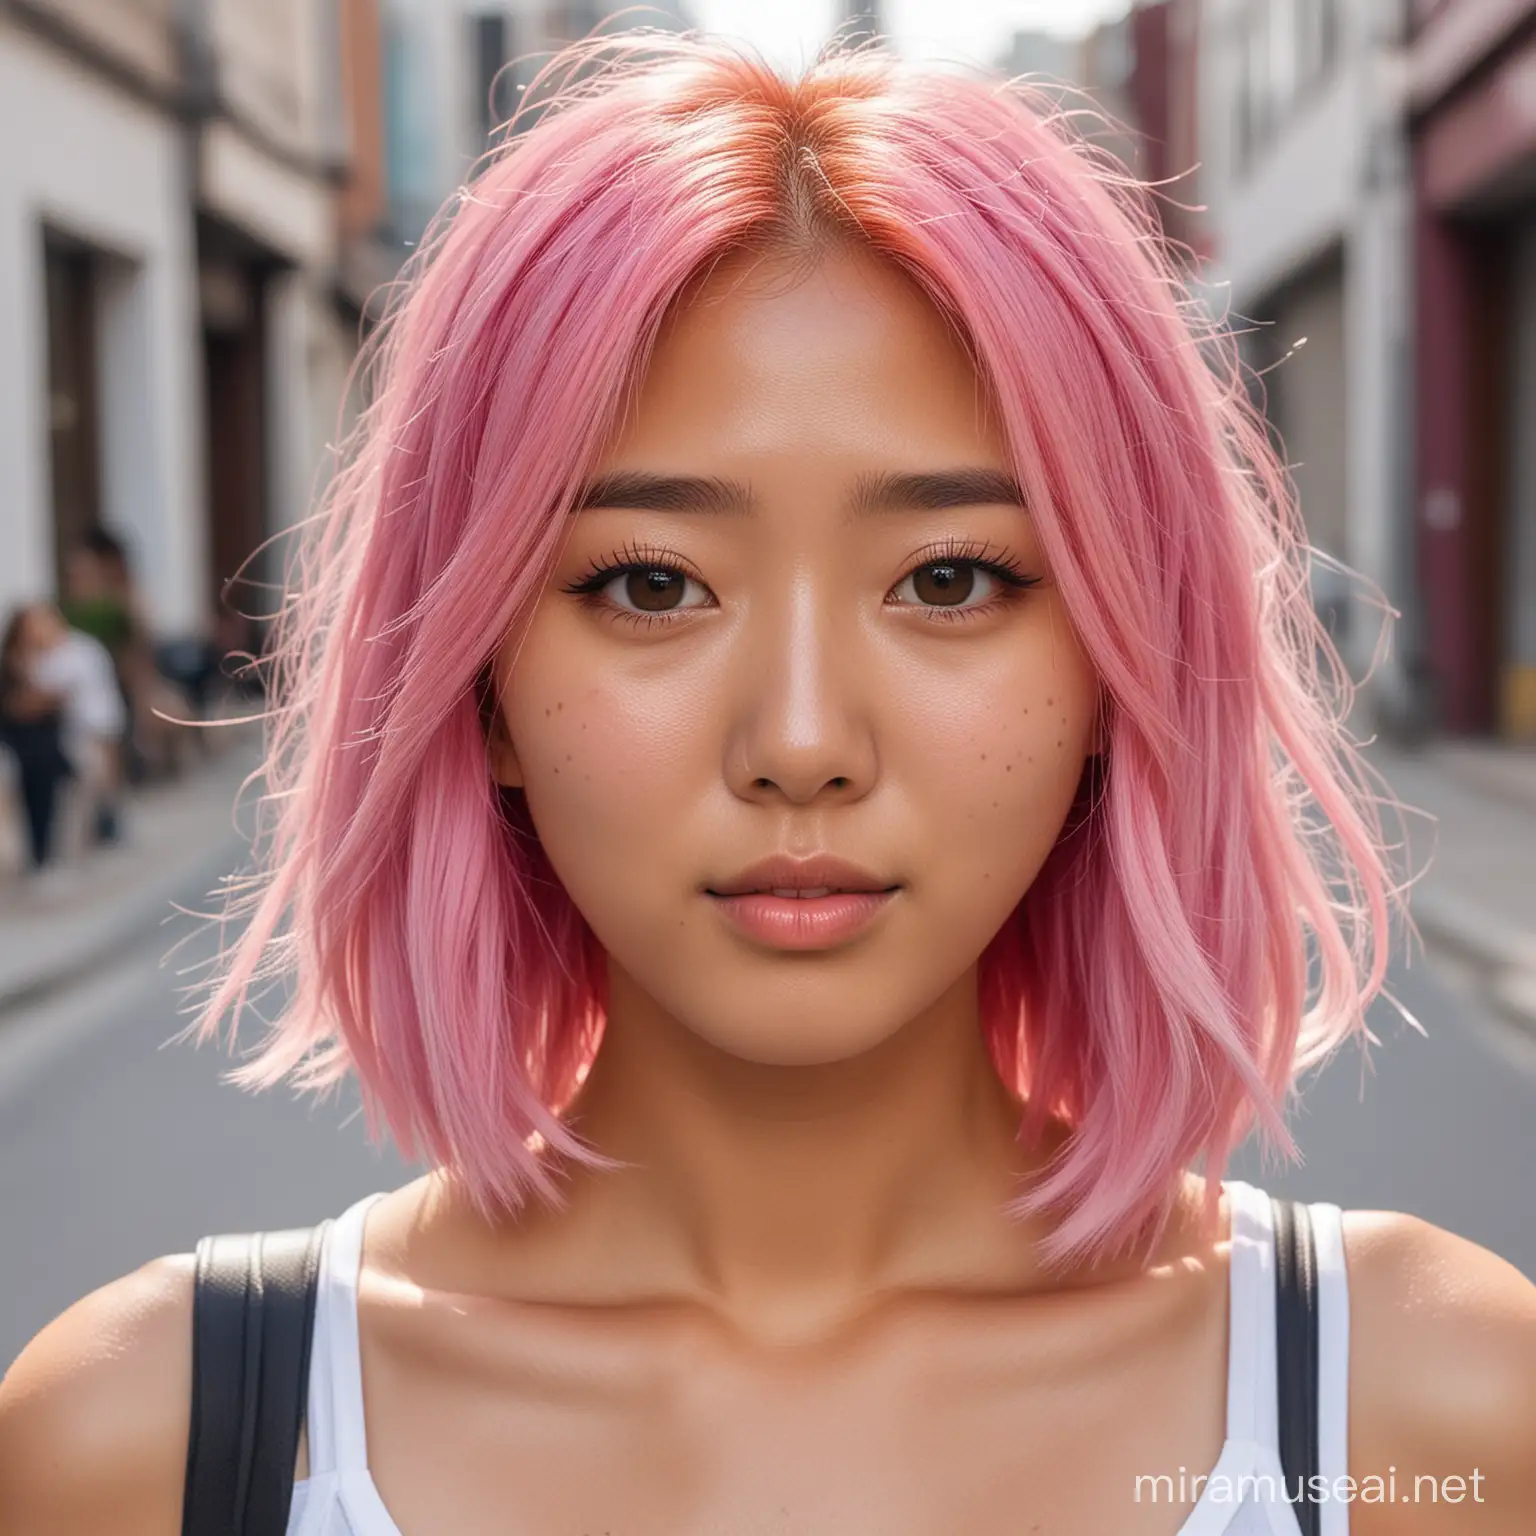 Korean Woman with Pink Hair on Urban Street